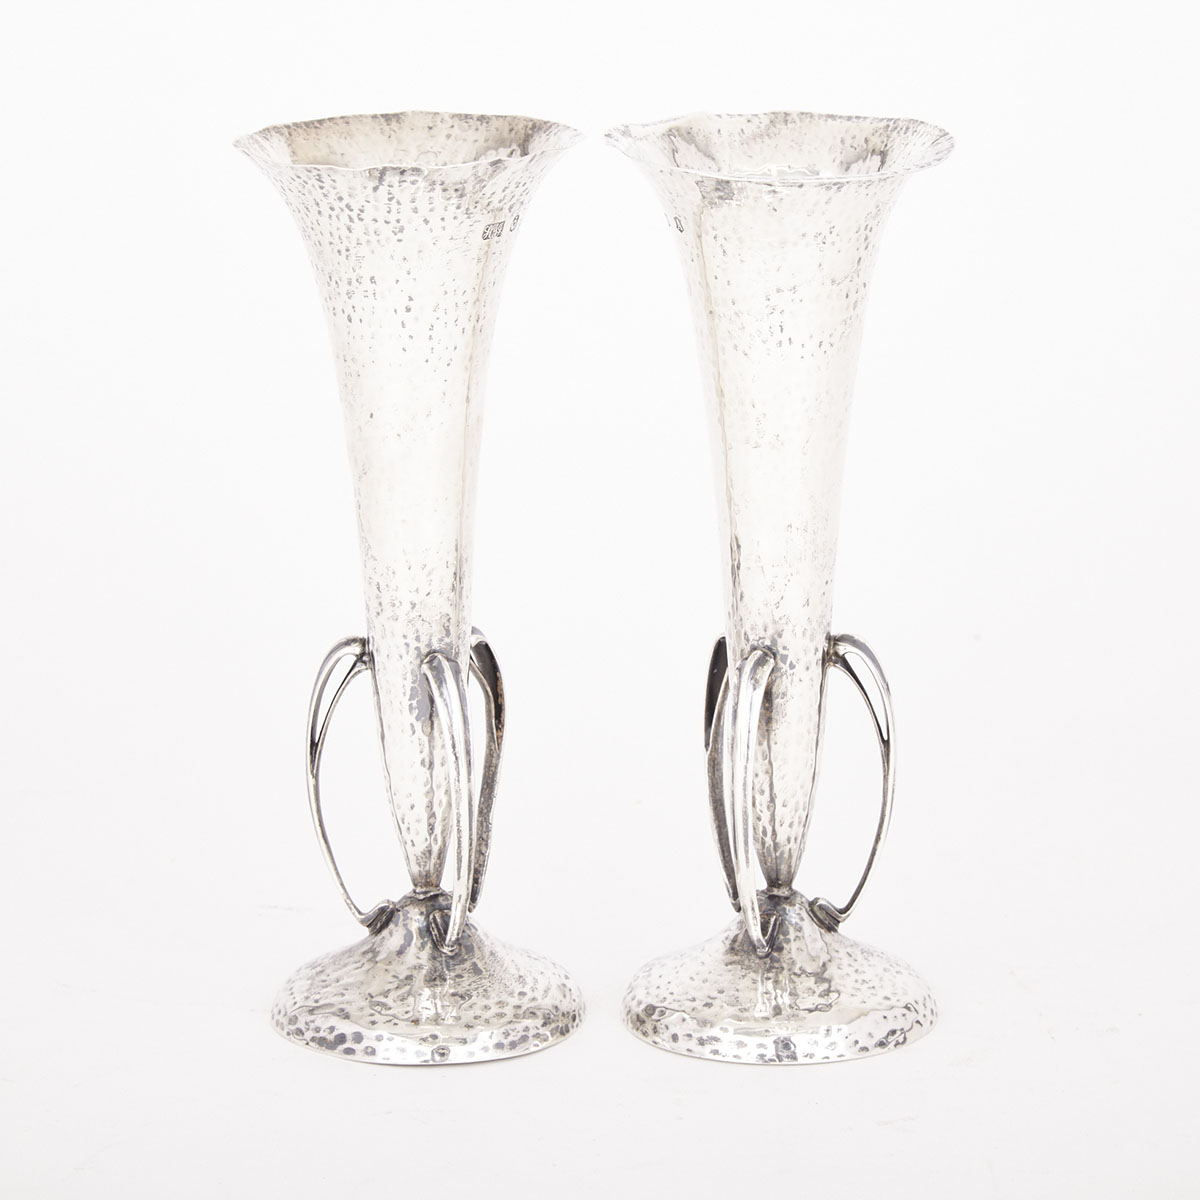 Pair of Edwardian Scottish Arts and Crafts Silver Vases, Hamilton & Inches, Edinburgh, 1906